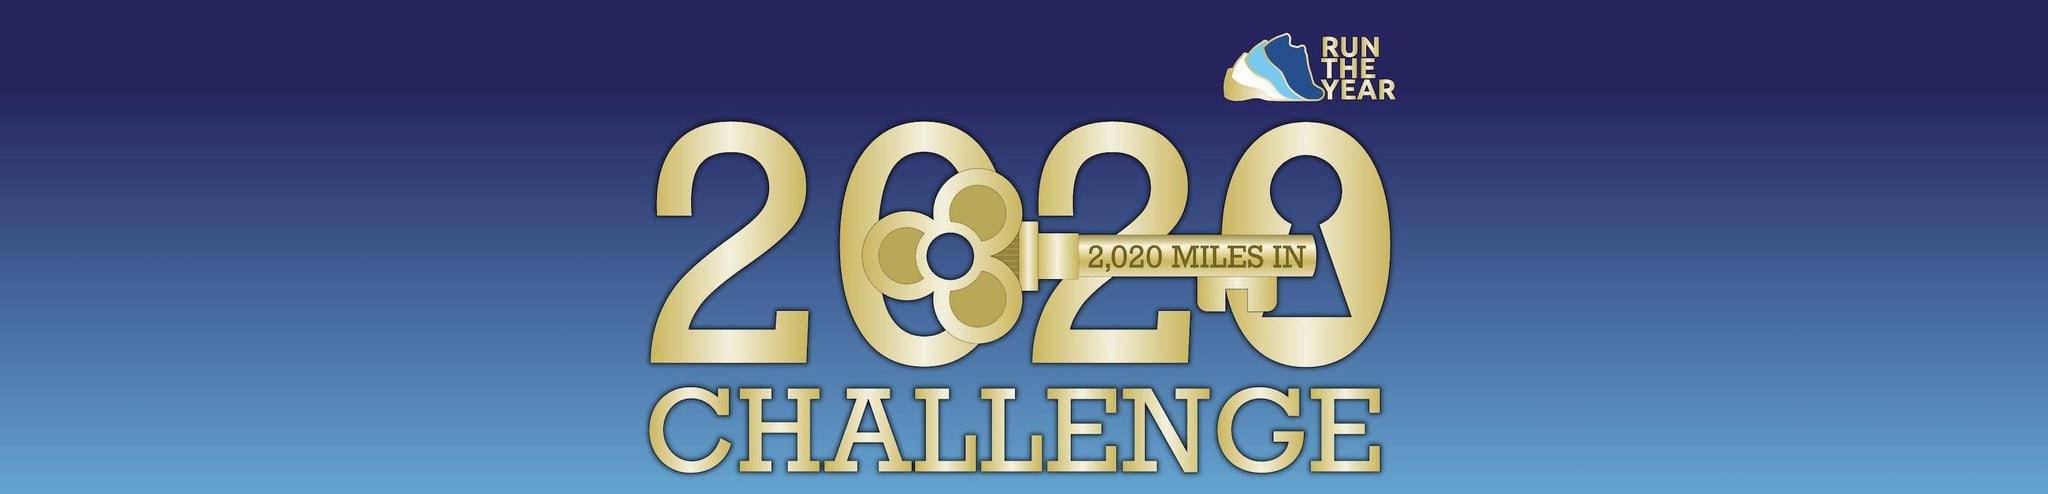 Run The Year 2020: A Field Guide - Virtual Fitness Challenge Blog | Run The Edge